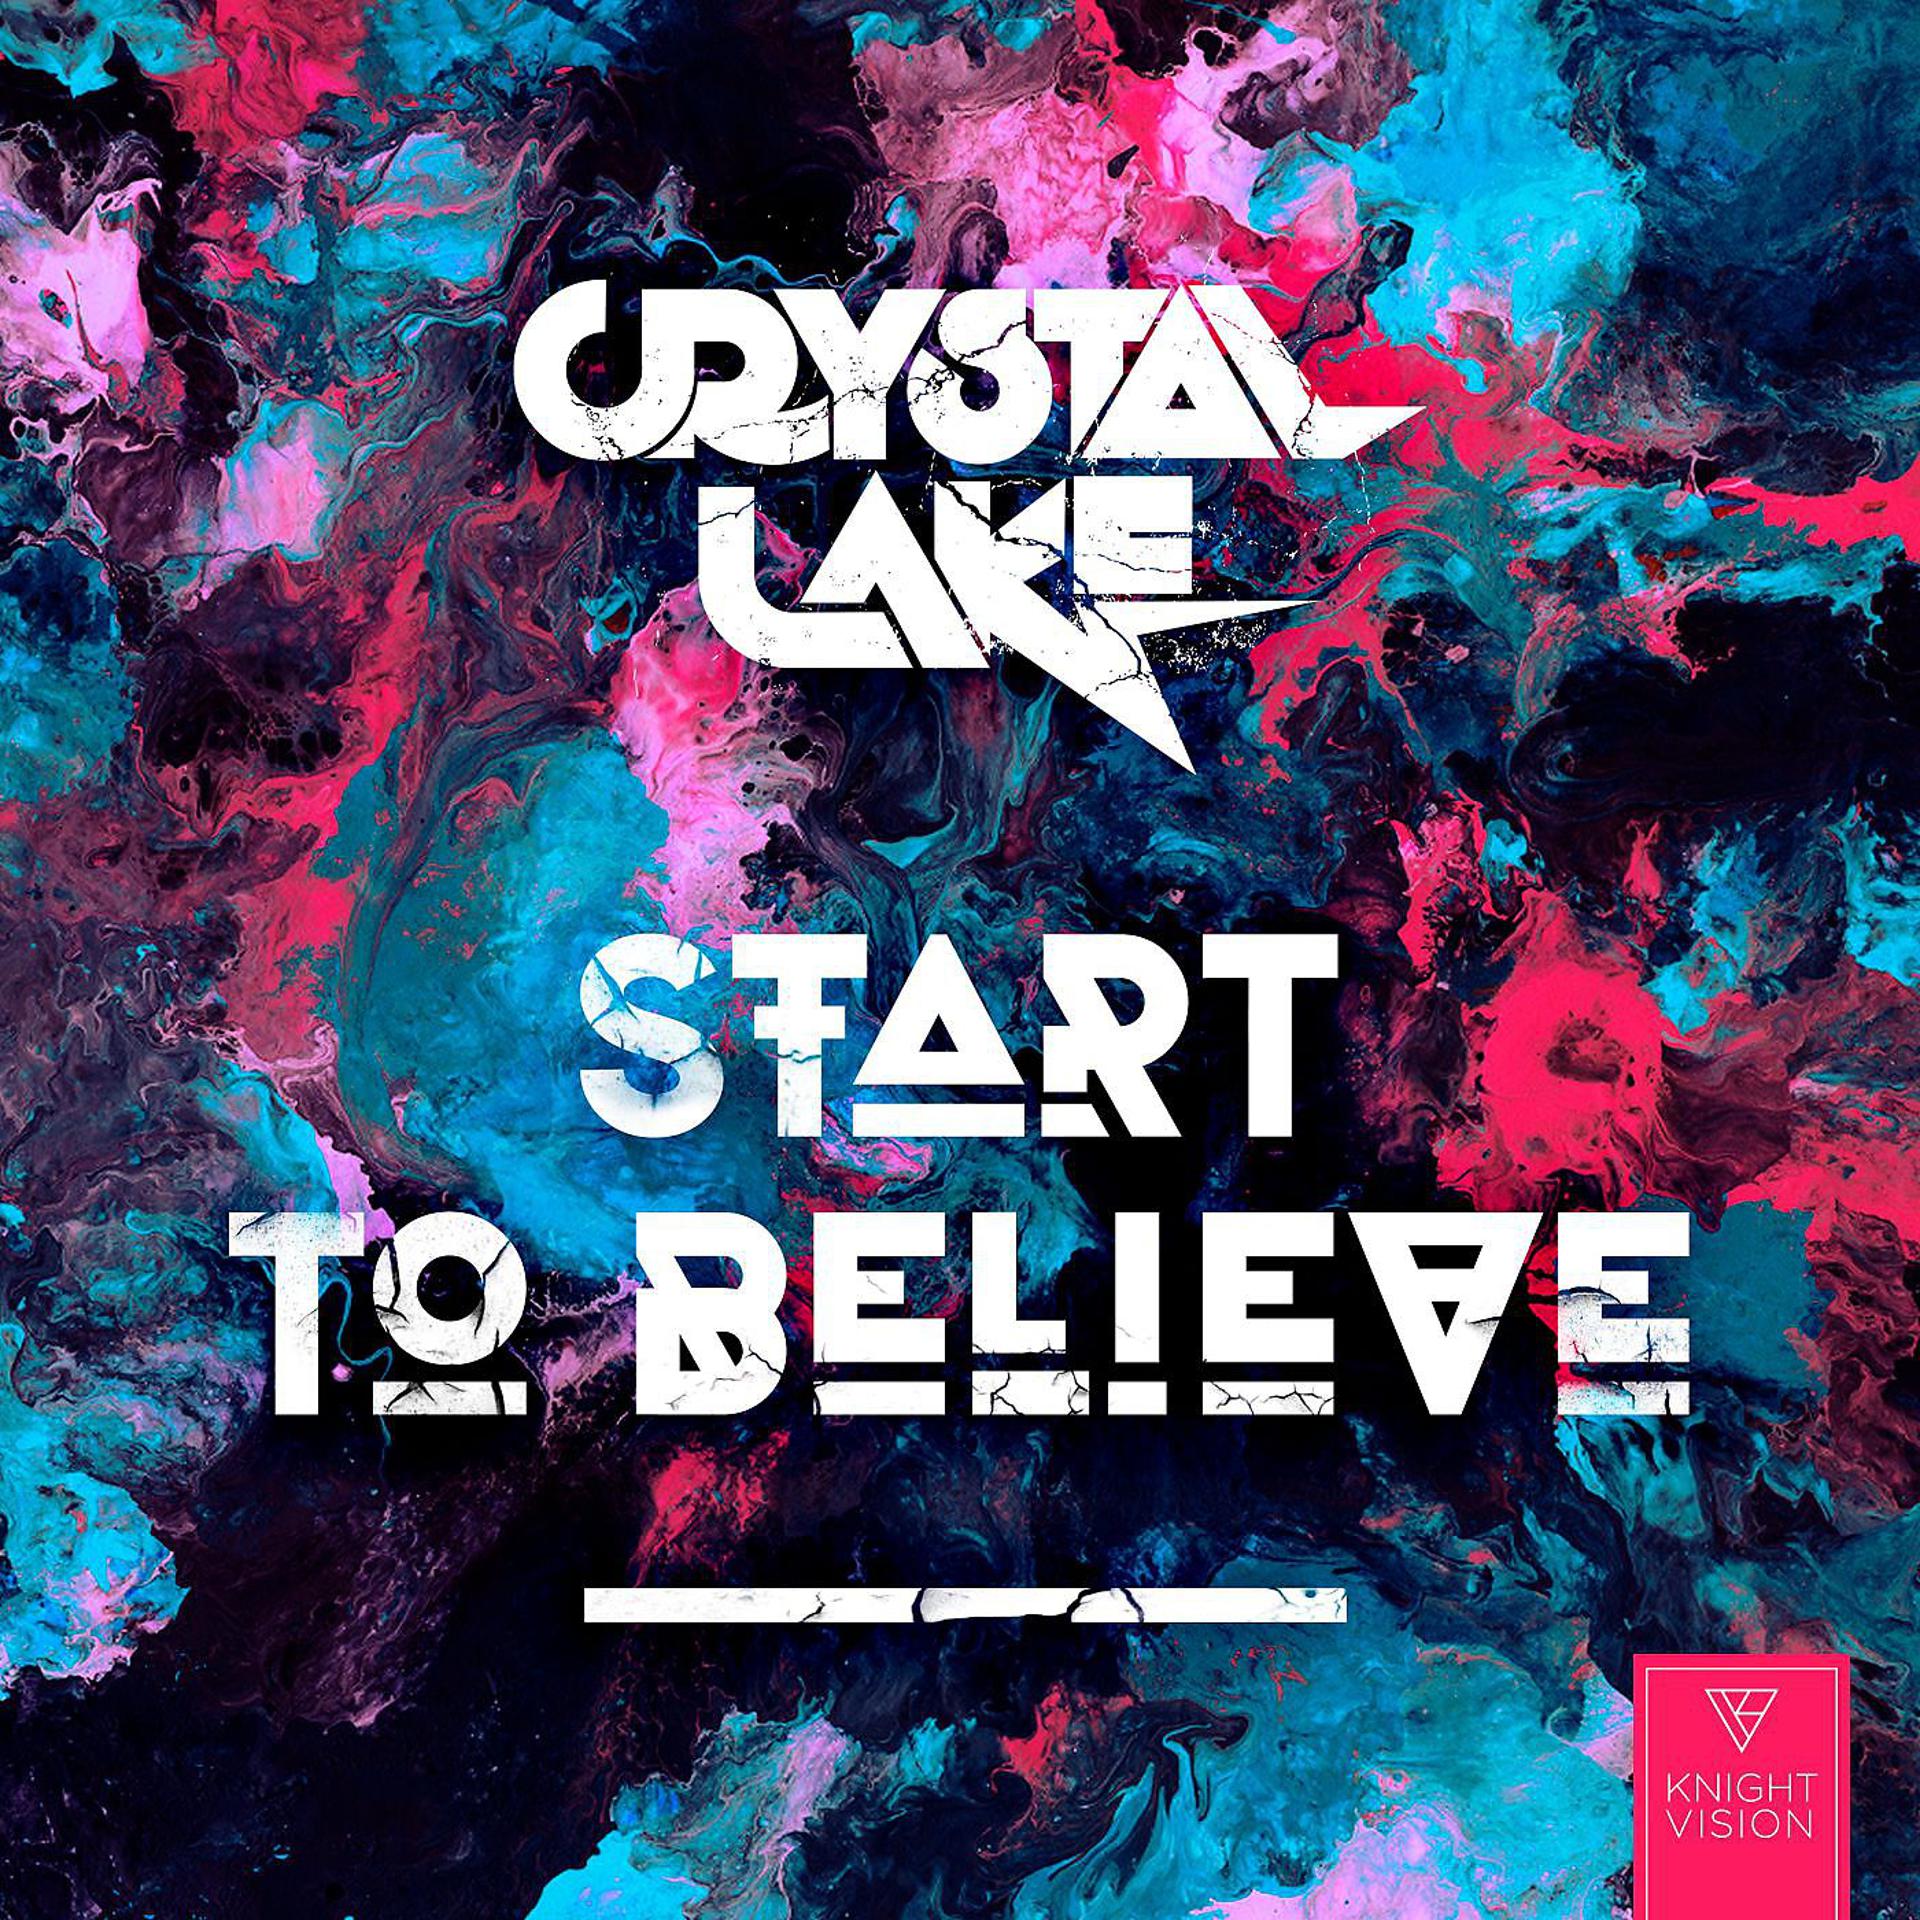 Start! Альбом. Песня start believe. Crystal Believer. Lake start. Started to believe